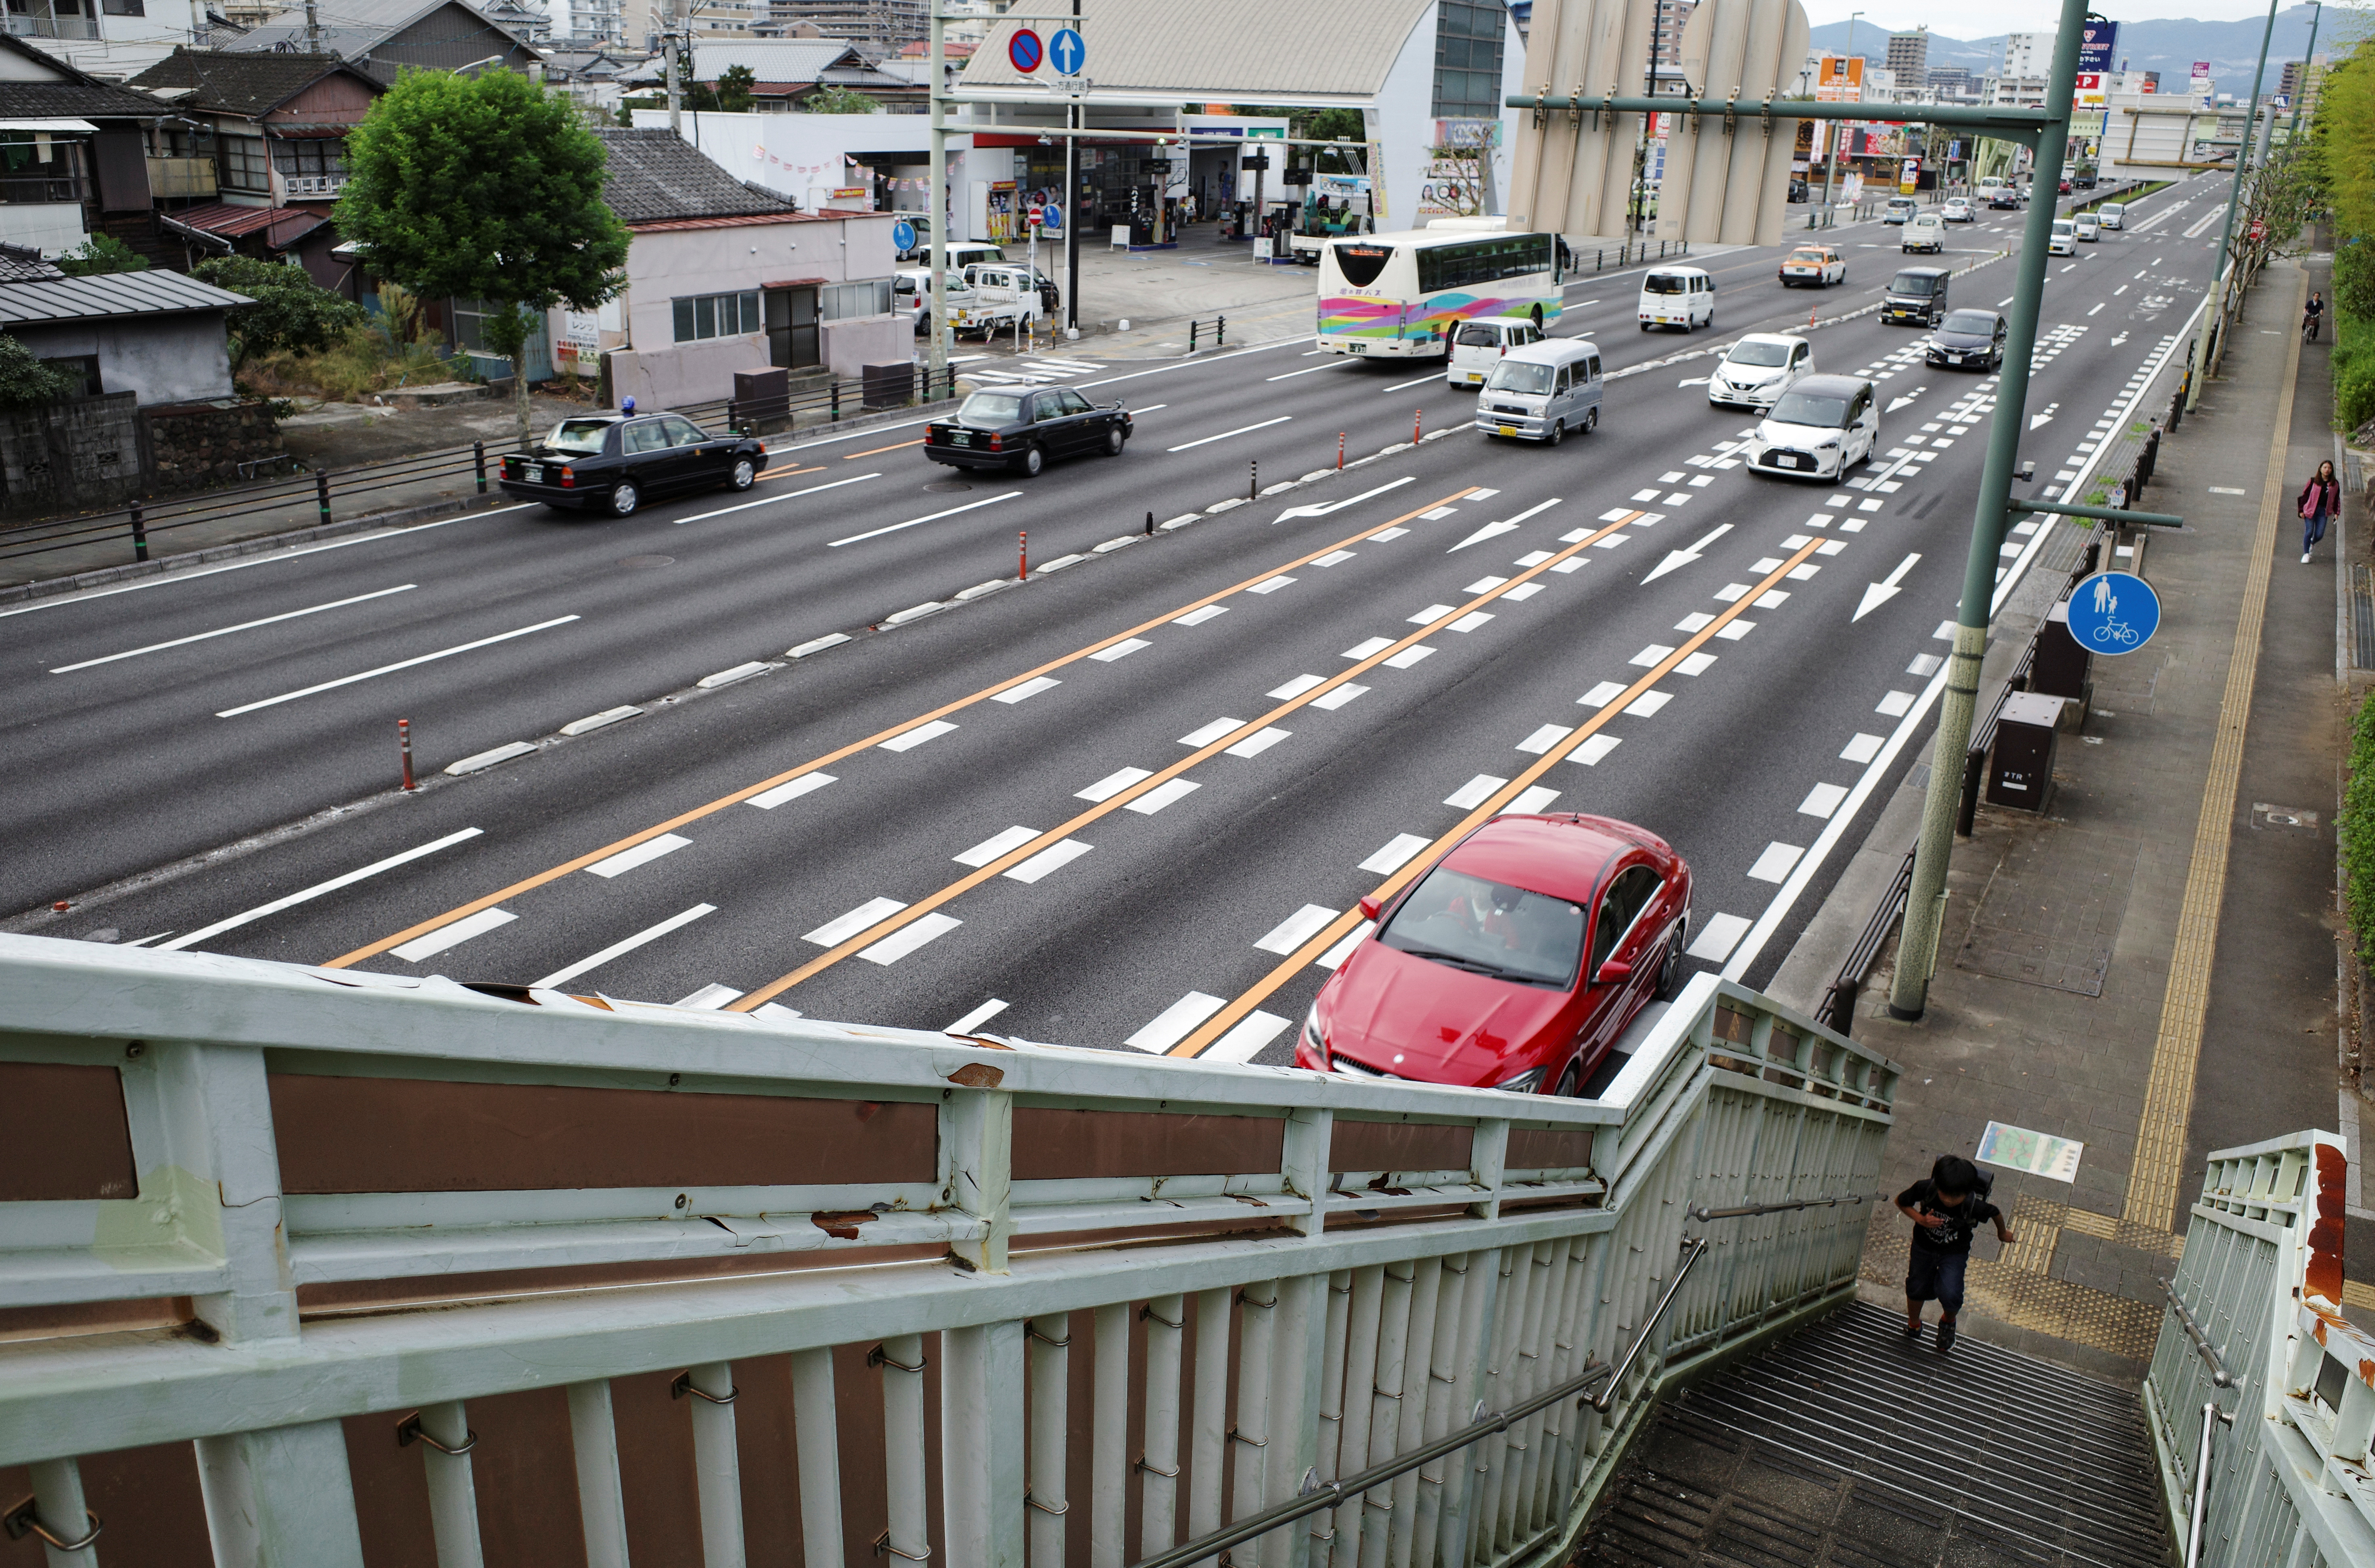  A schoolboy walks up the overhead bridge along a traffic junction in Beppu